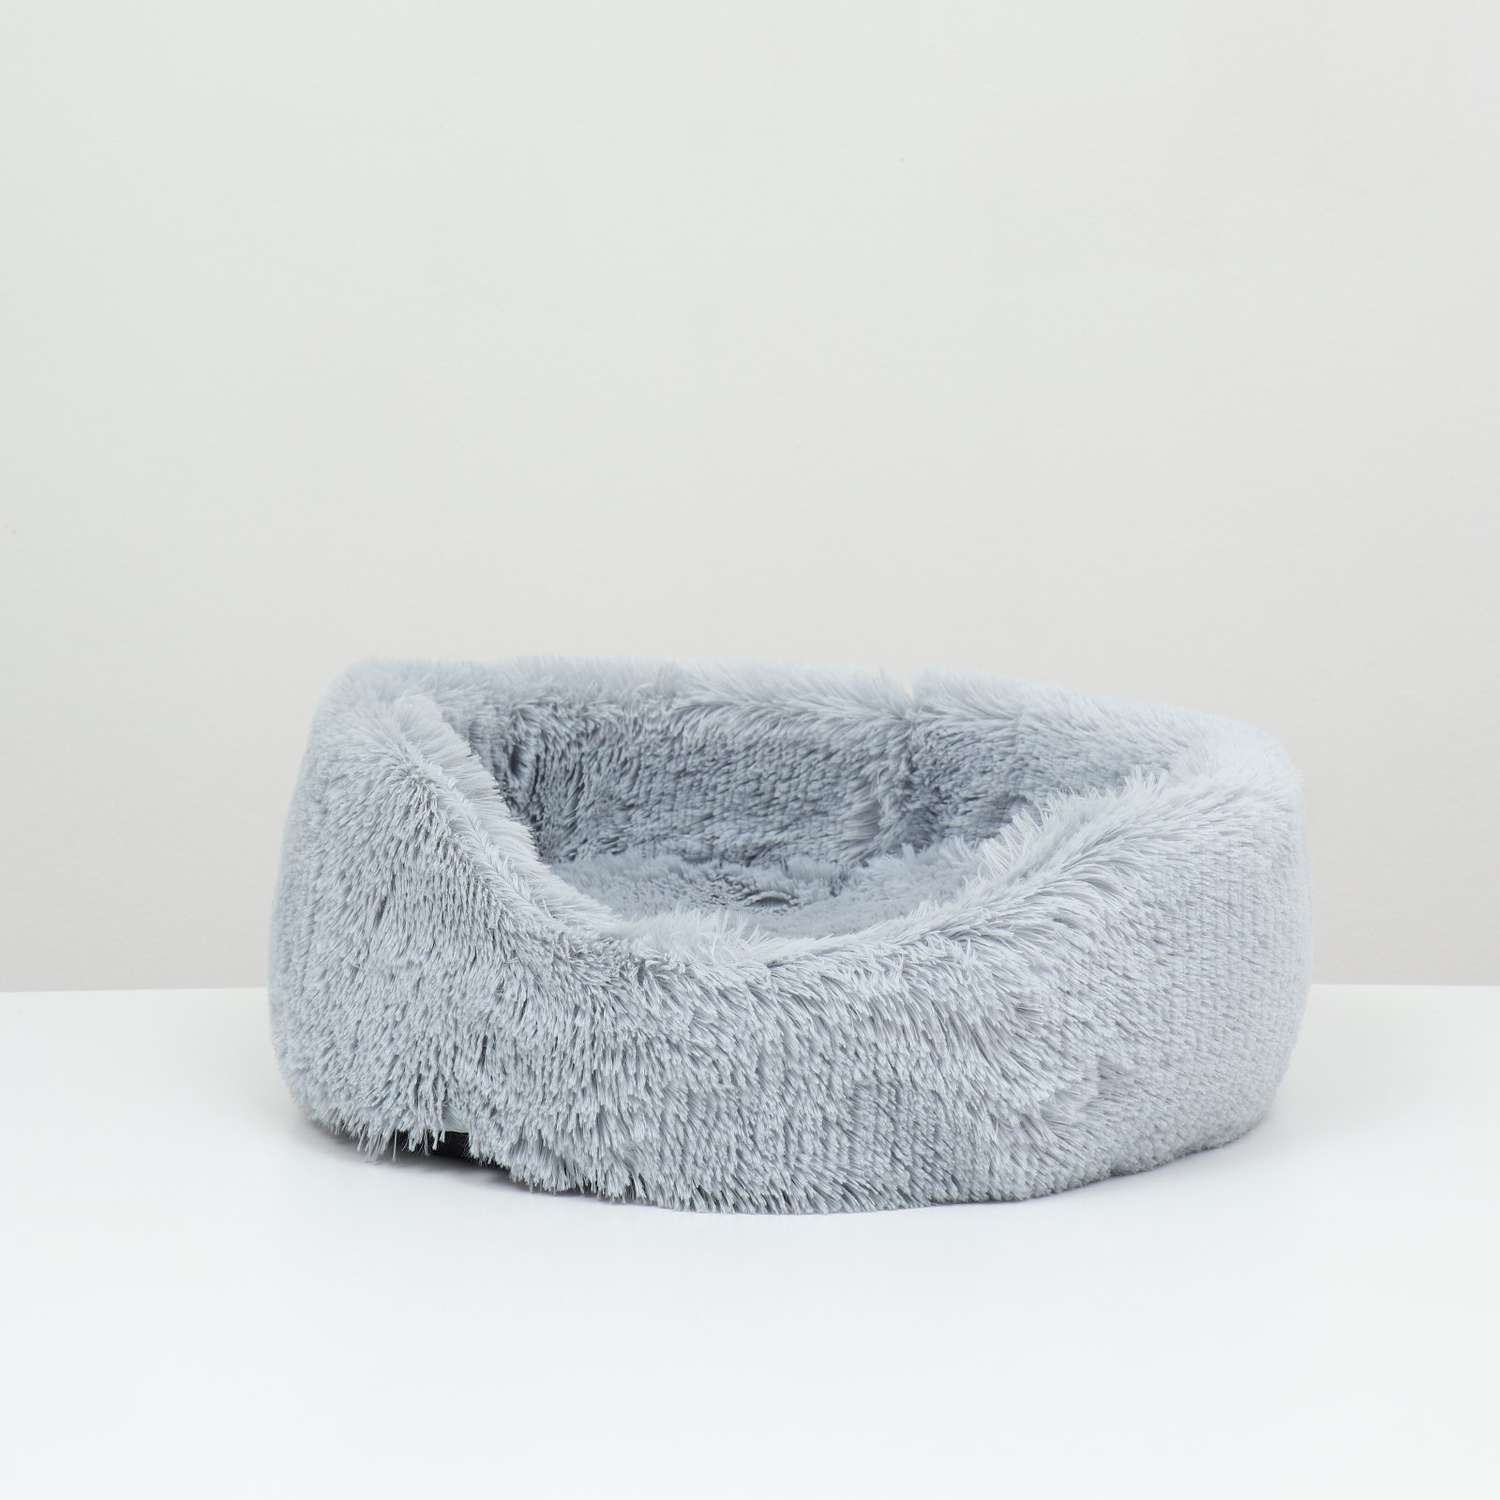 Лежак Пижон с подушкой мех сатин периотек 40х40х16 см серый - фото 2